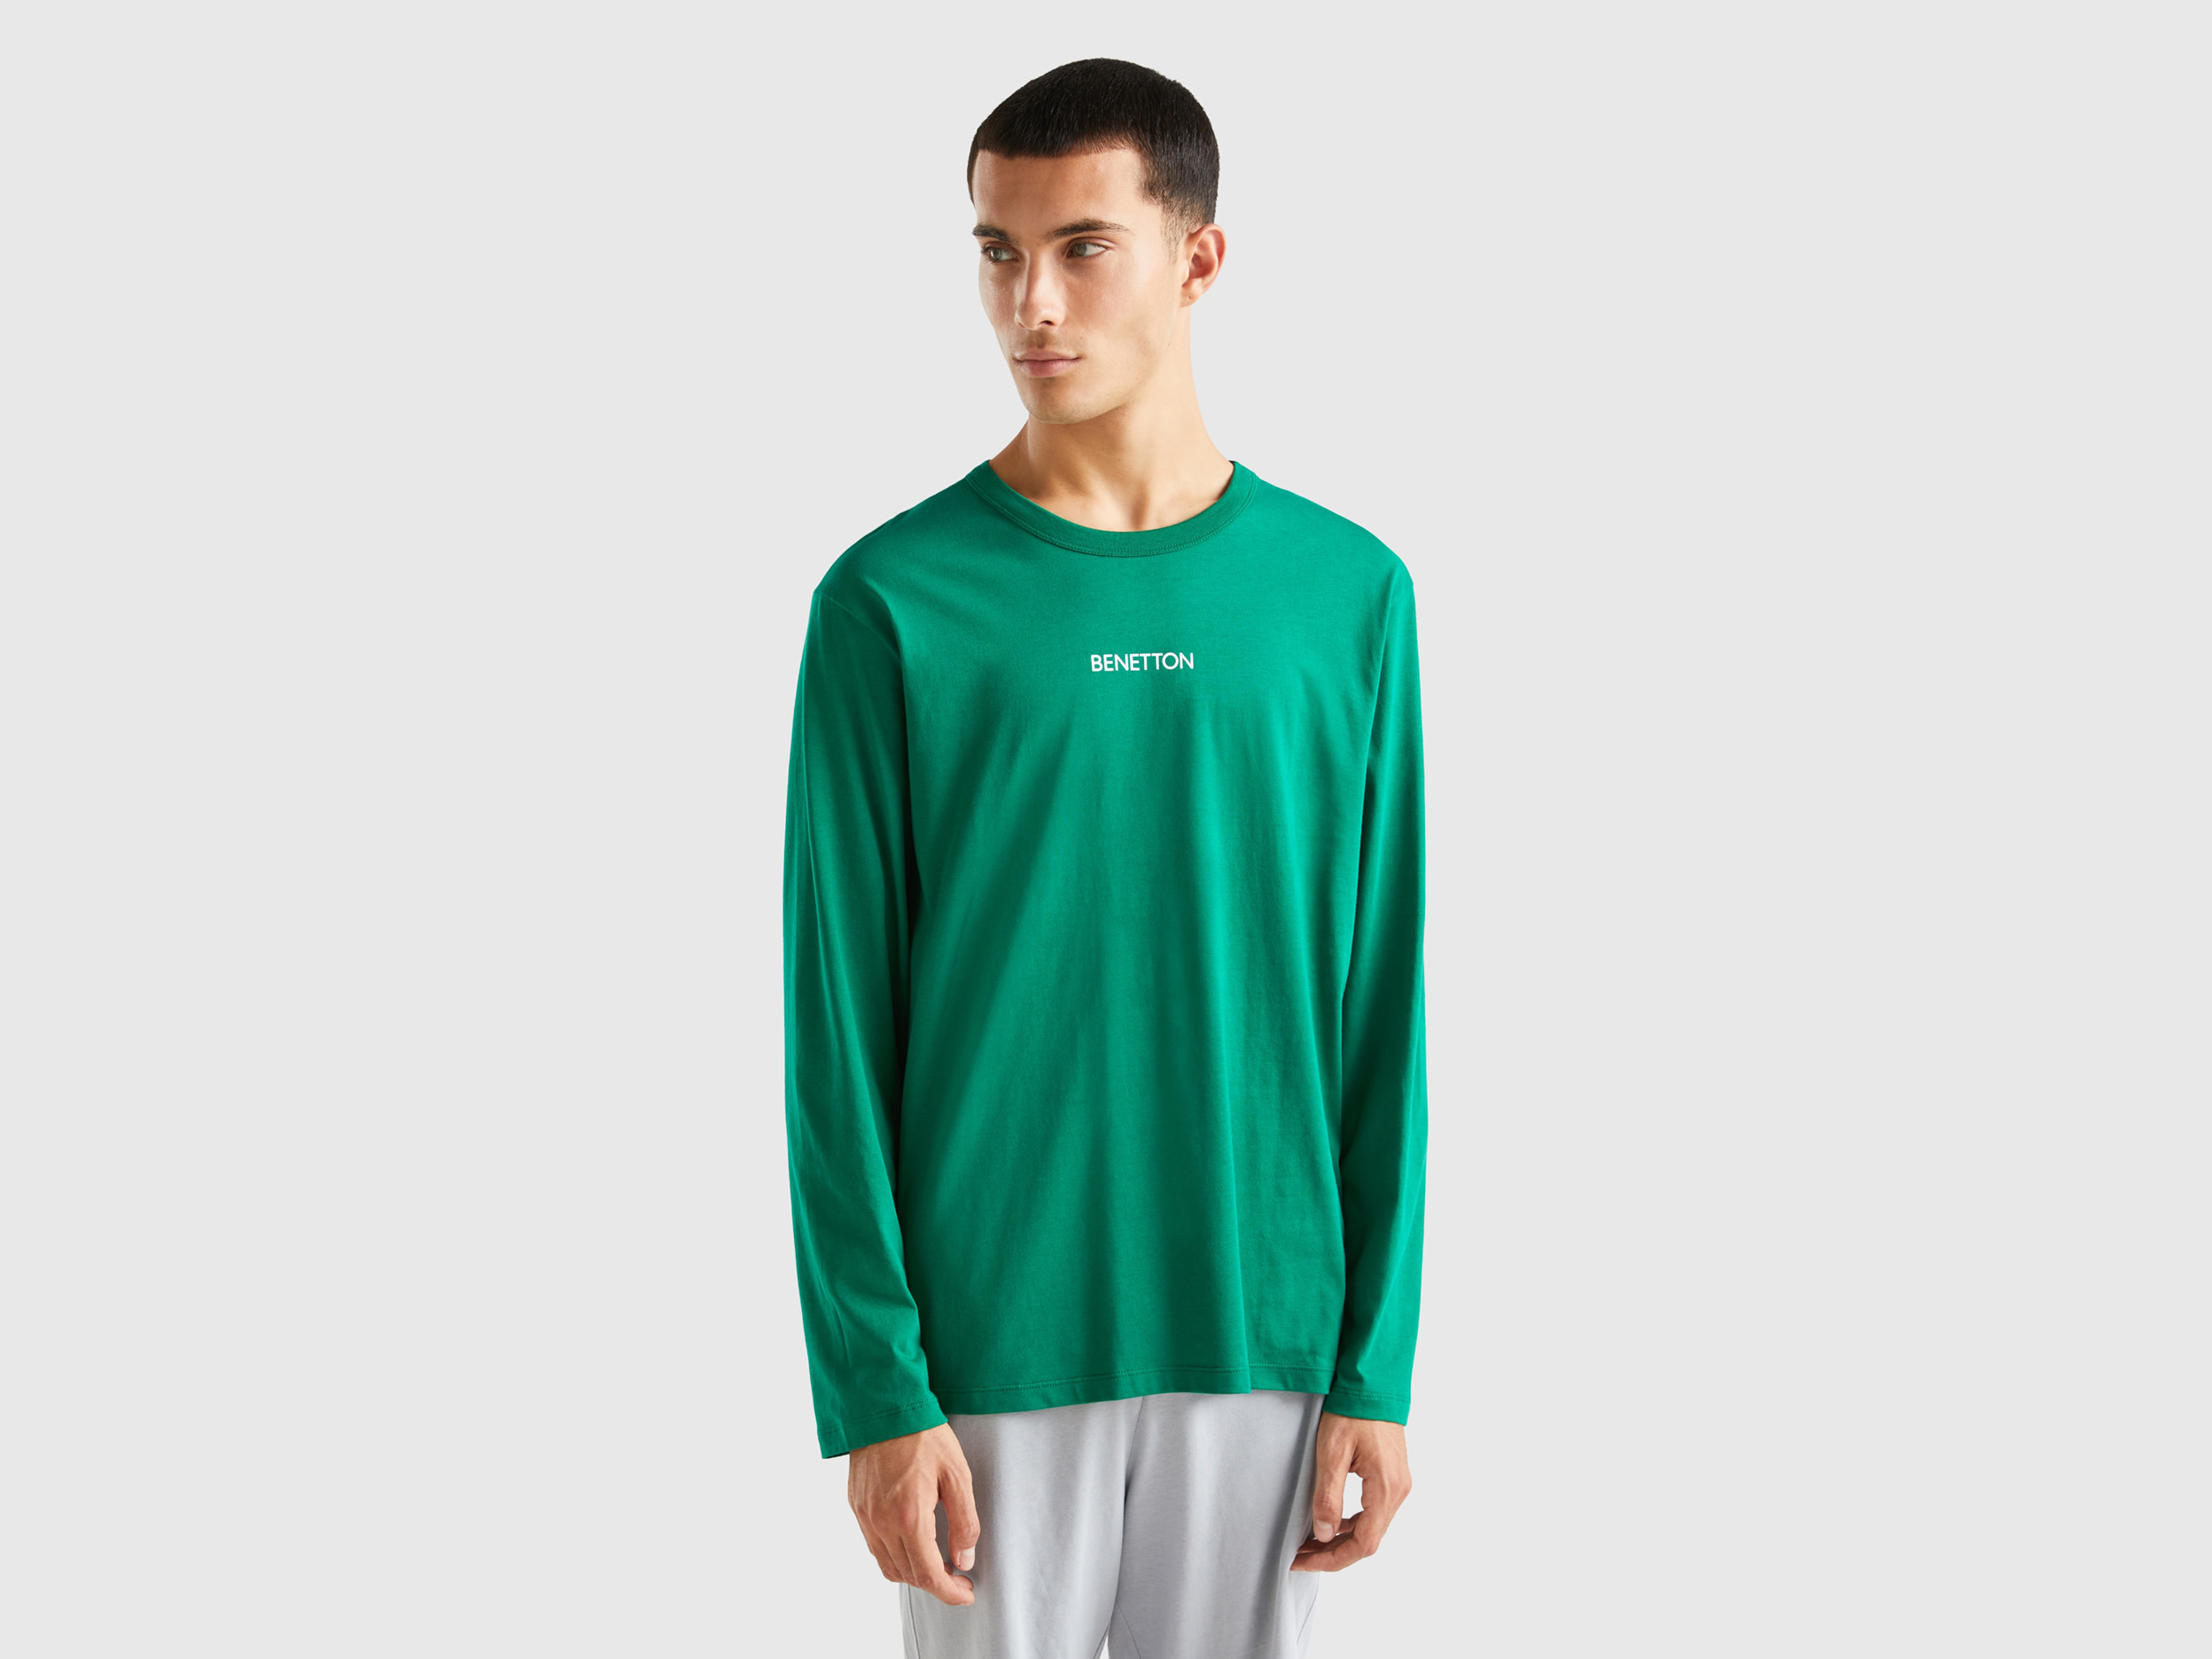 Benetton, Long Sleeve 100% Cotton Top, size XL, Green, Men